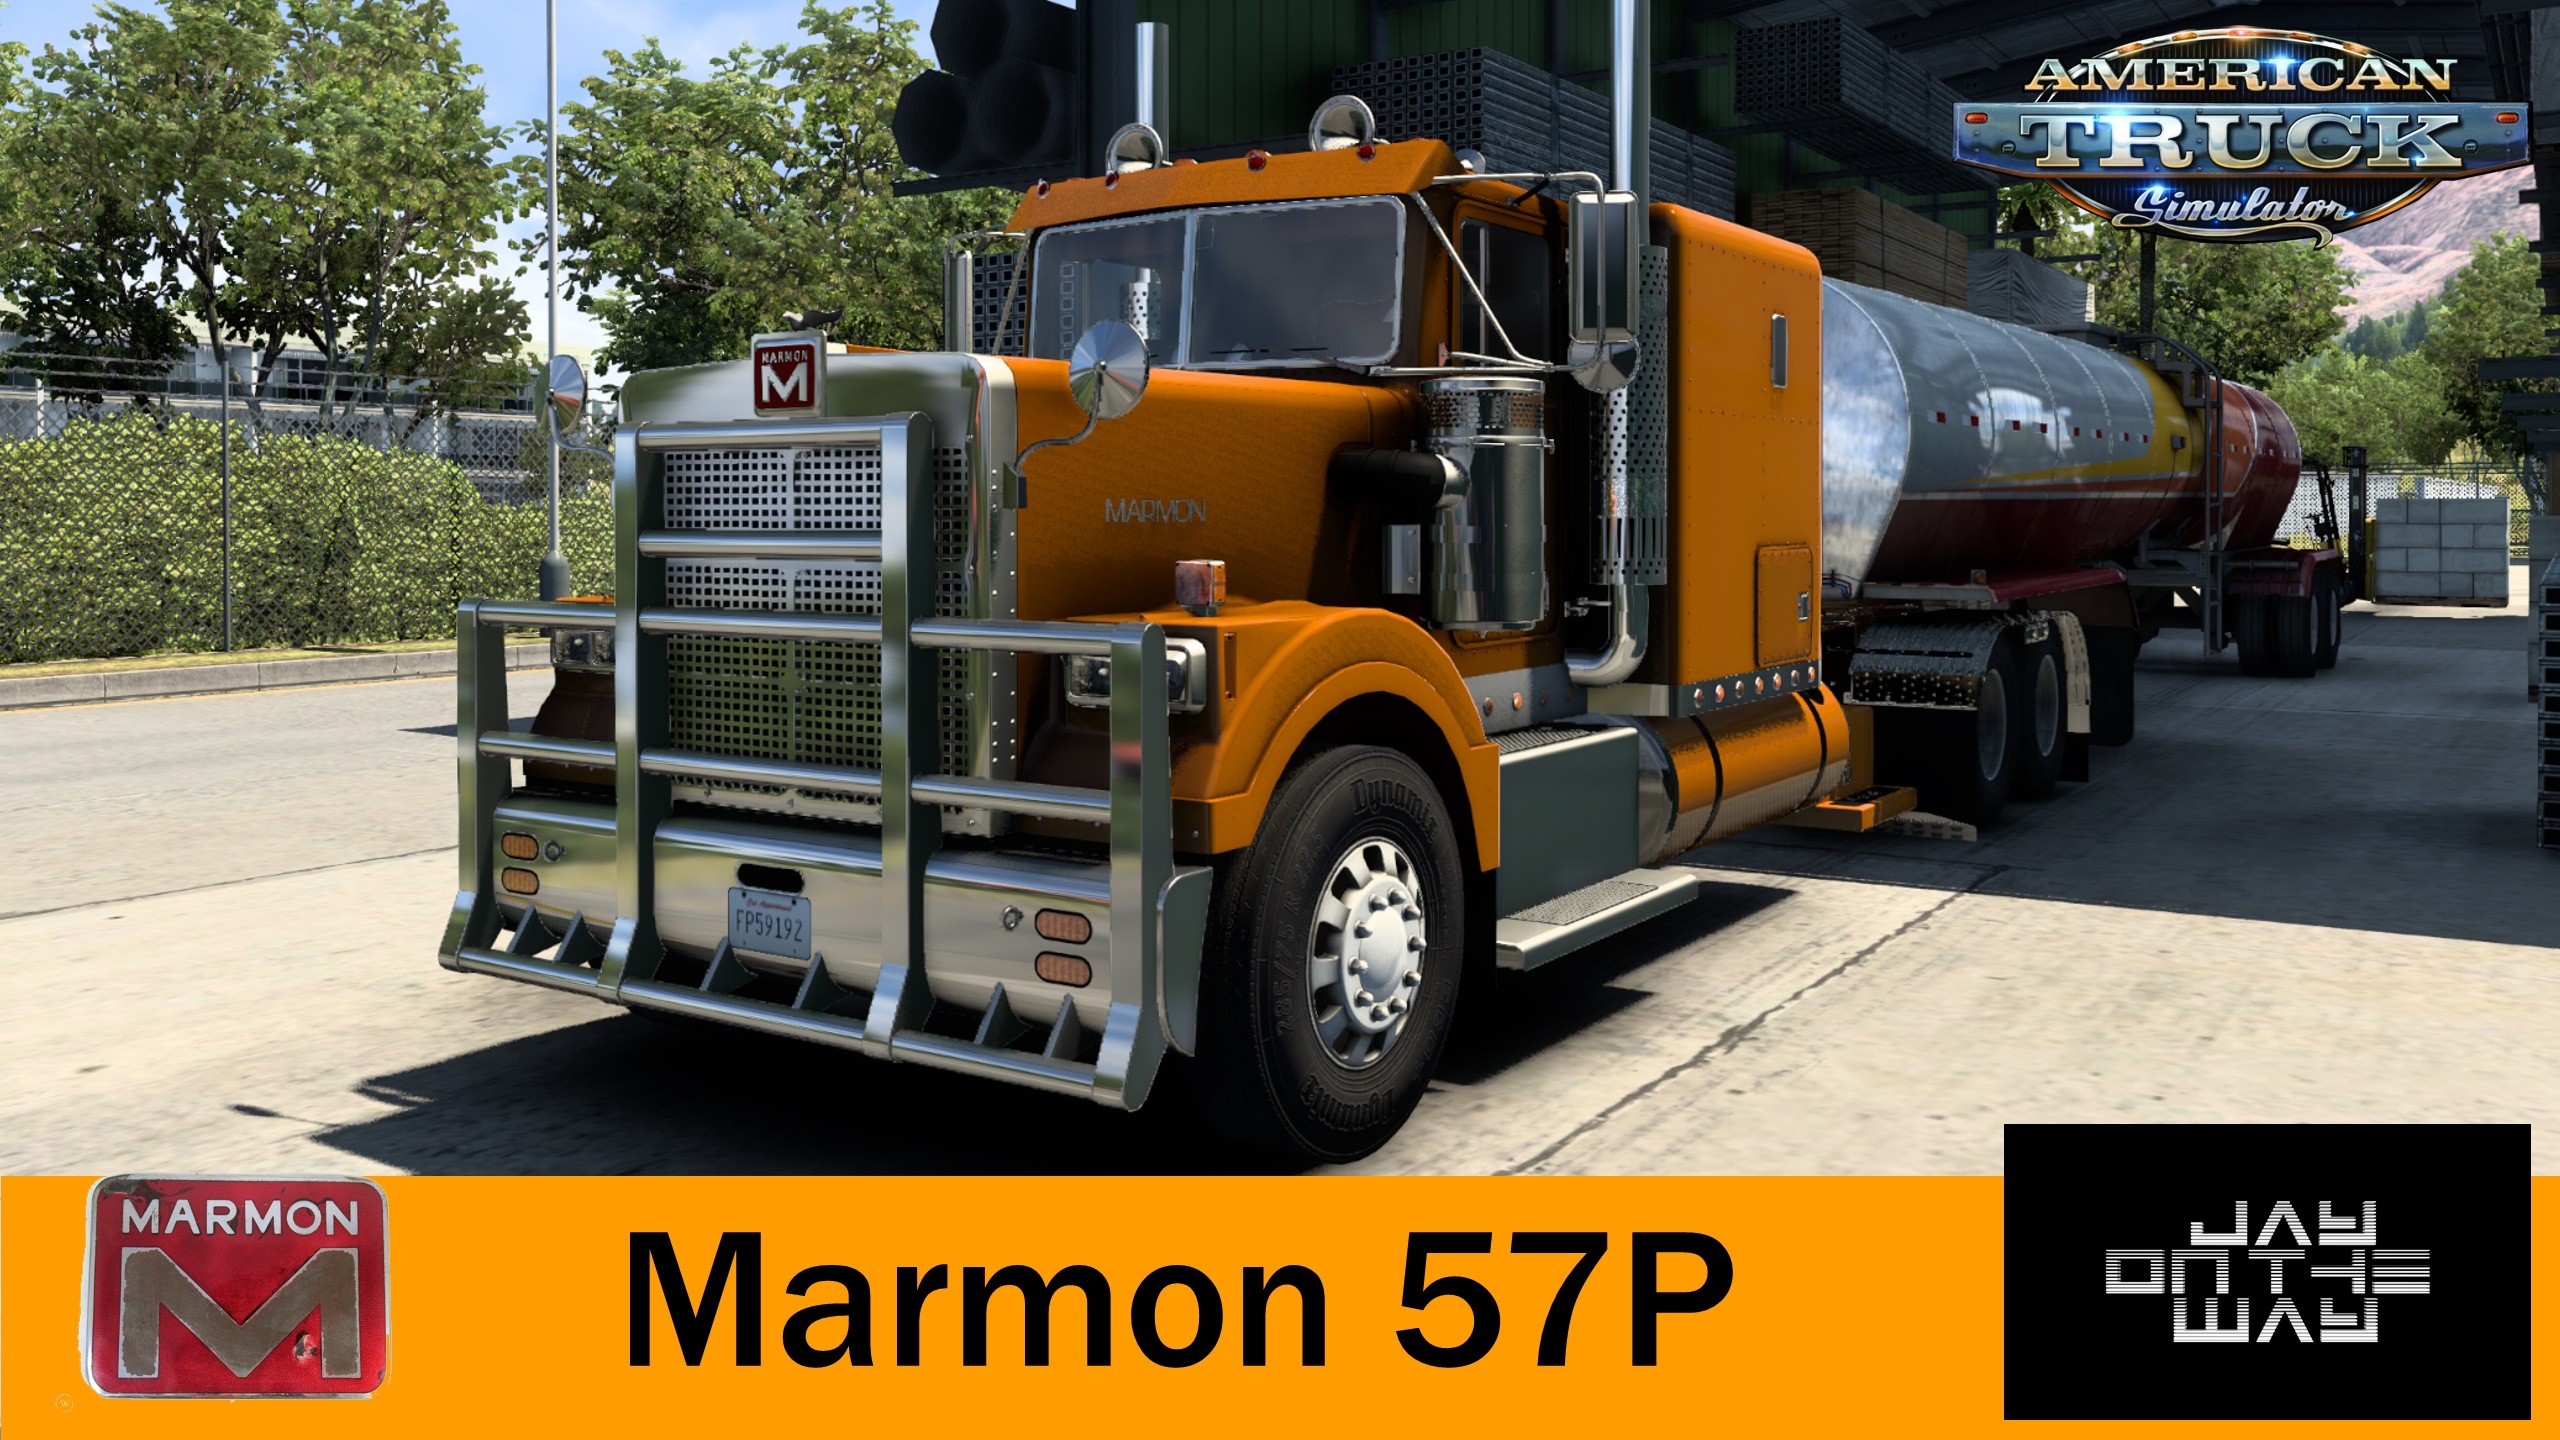 Ats Marmon 57p Truck 140x American Truck Simulator Modsclub